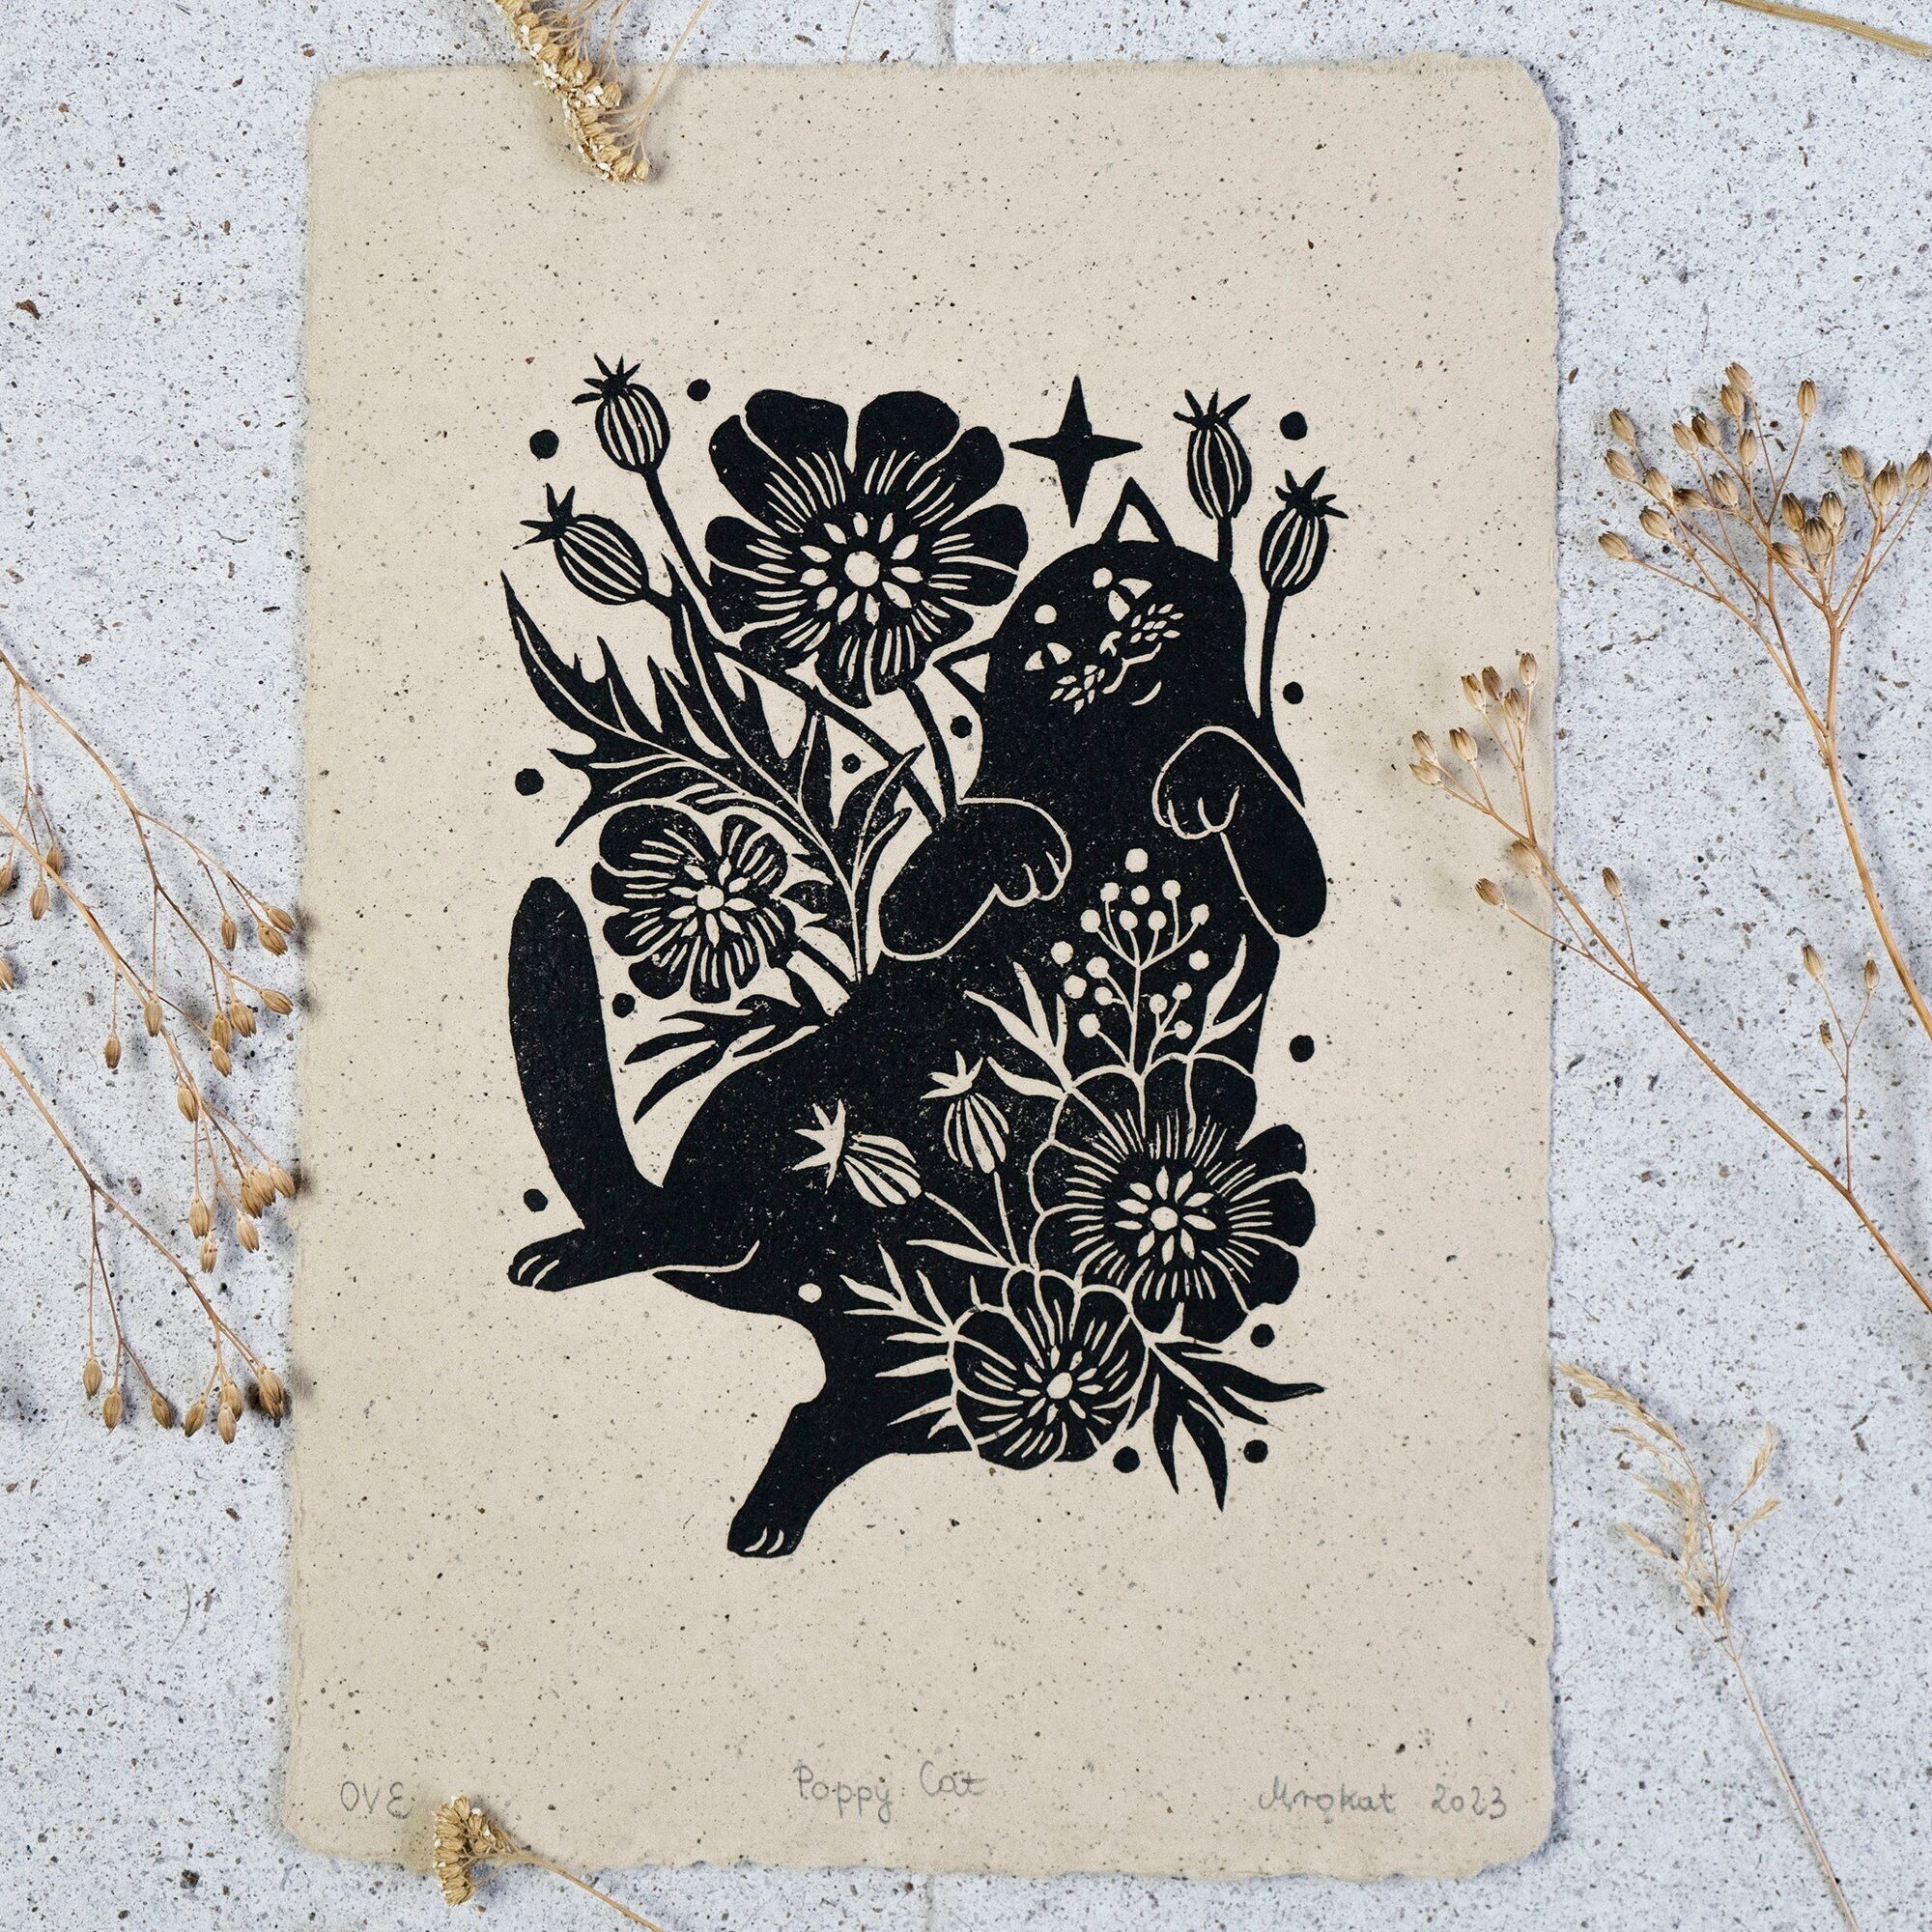 Witch's Familiar Black Cat Linocut Block Print Witchy Mystical